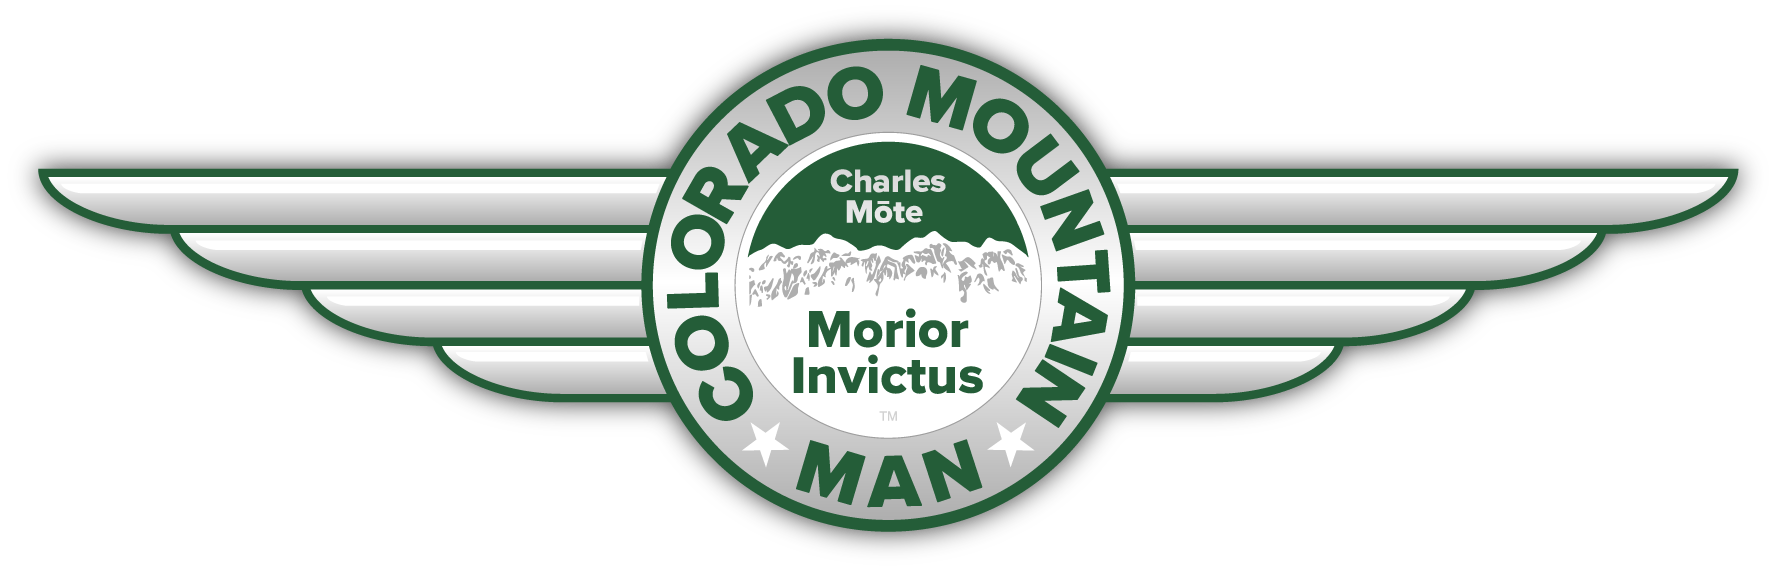 Colorado Mountain Man Charles Mote